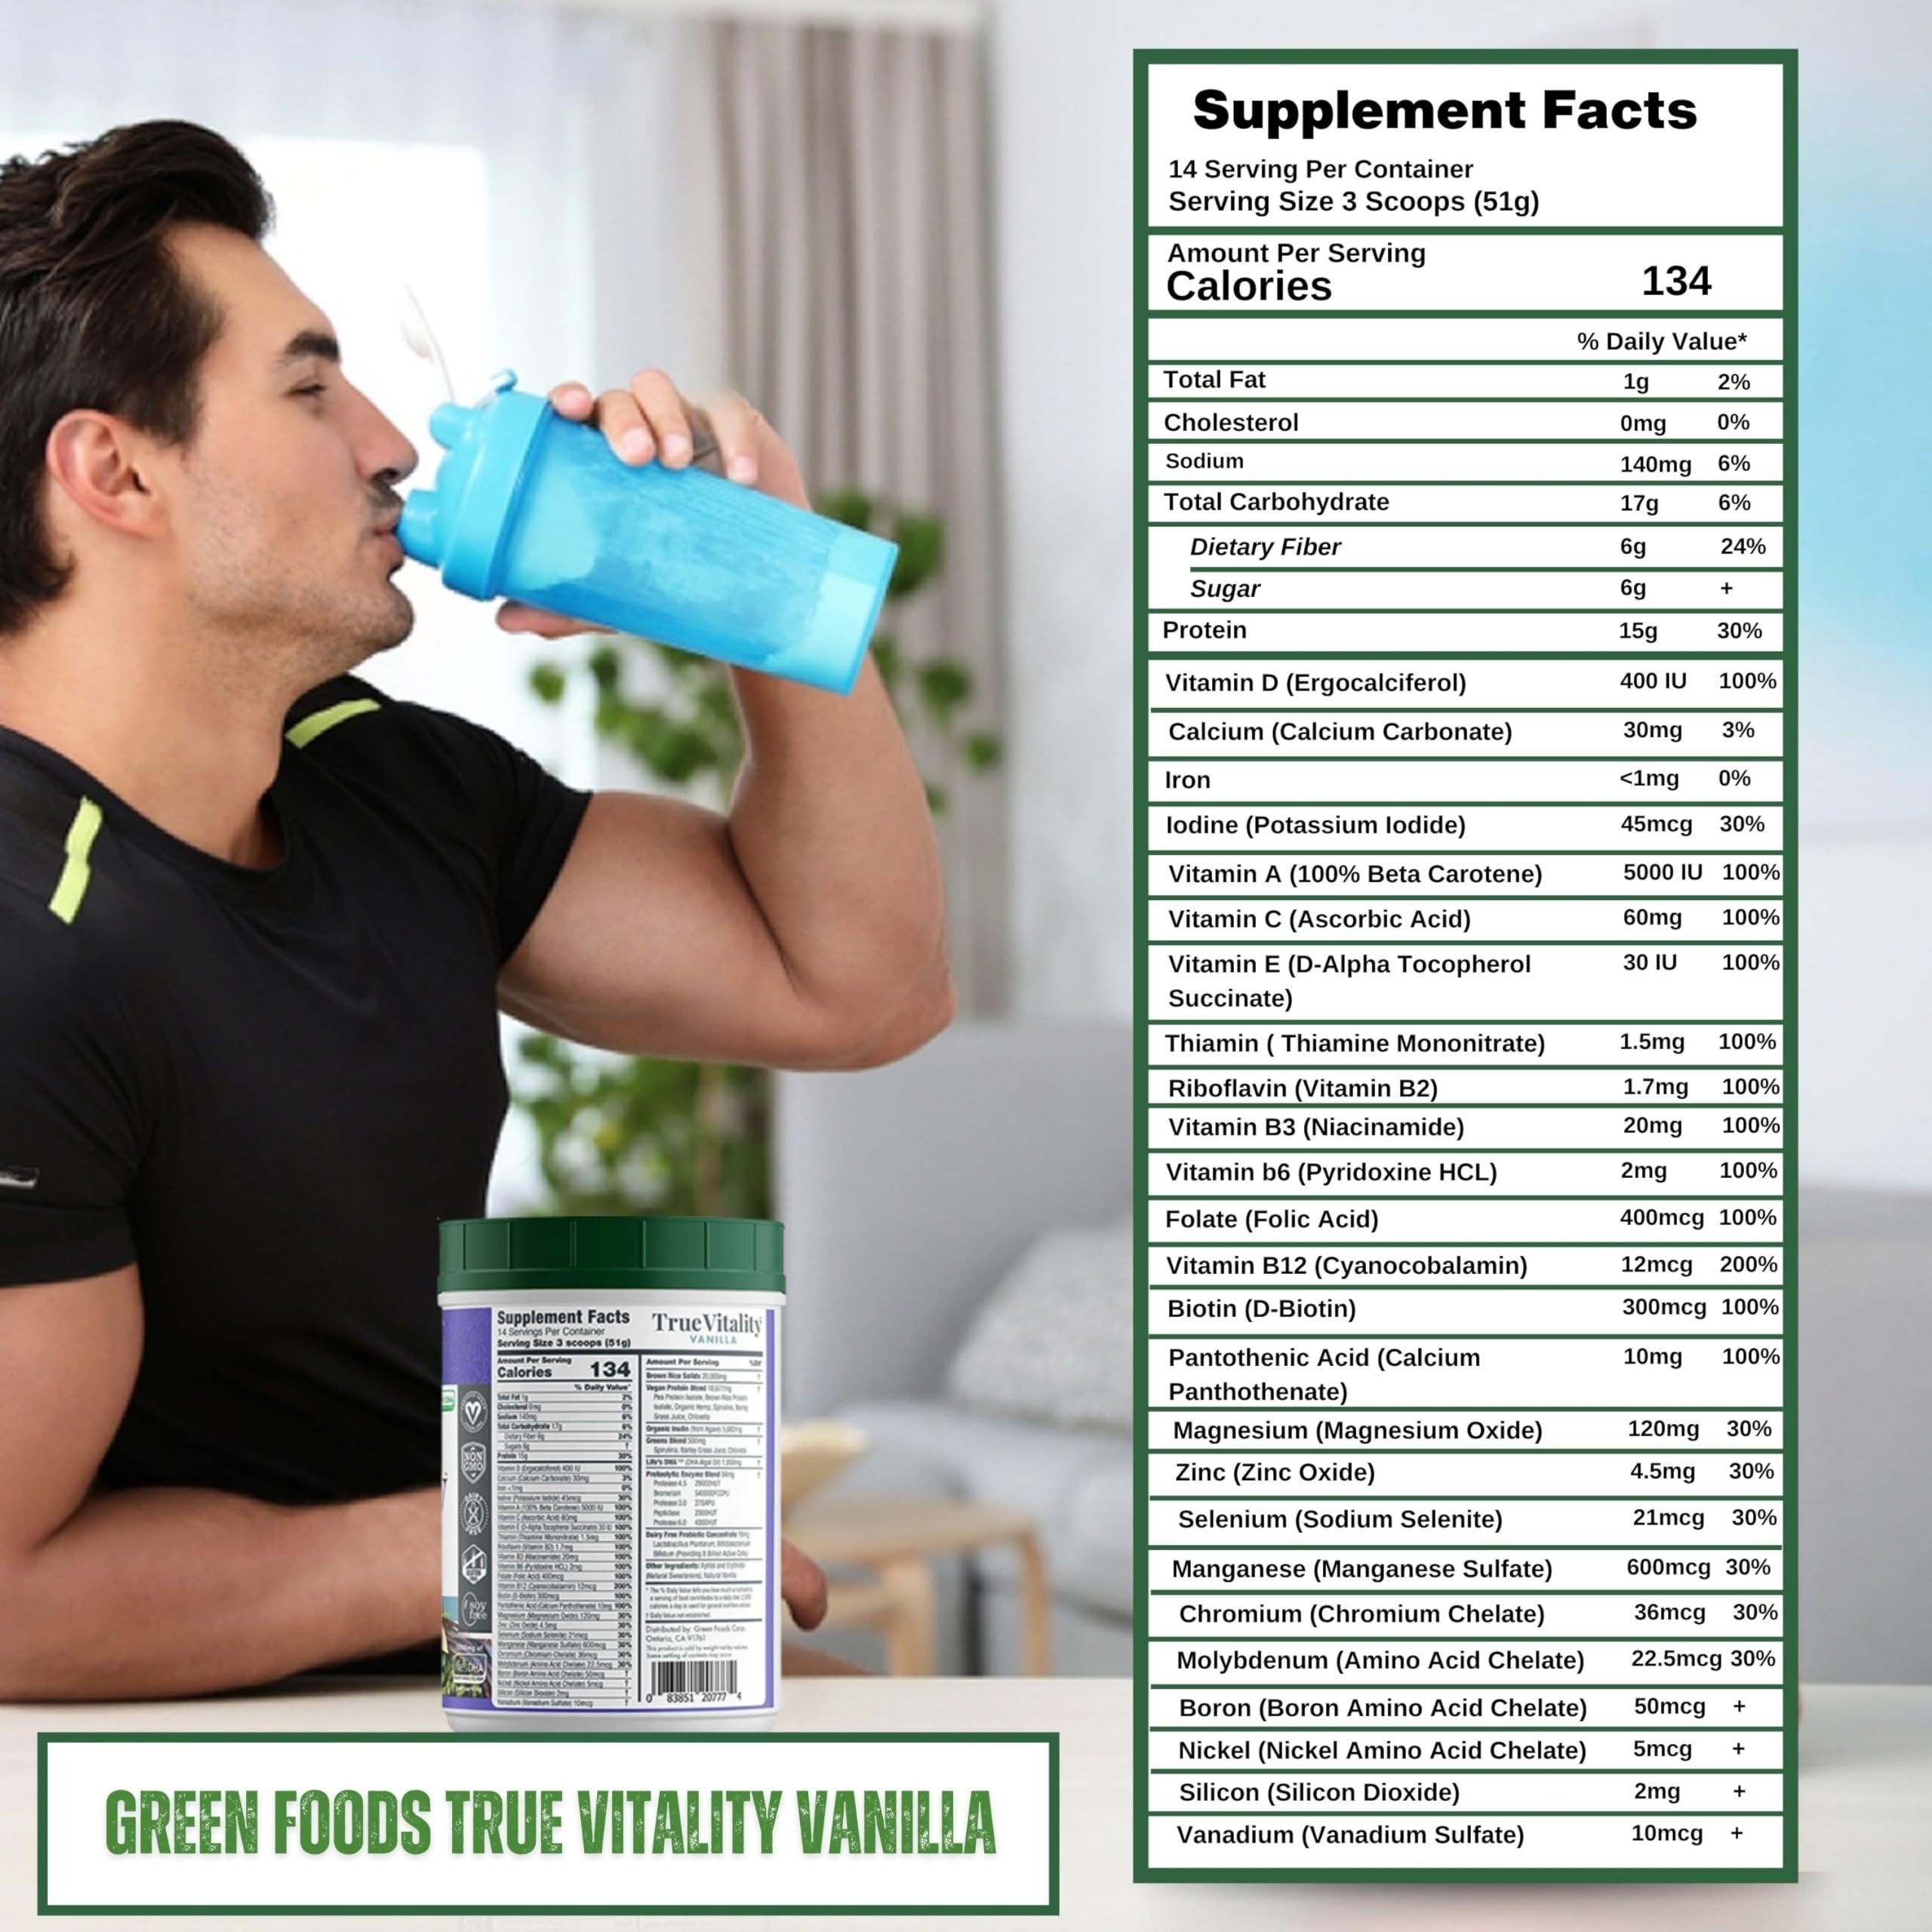 Worldwide Nutrition Bundle, 2 Items: Green Foods True Vitality Plant Protein Shake with DHA Vanilla - 25.2 oz Protein Powder Gluten Free Breakfast Shake Powder and Multi-Purpose Key Chain